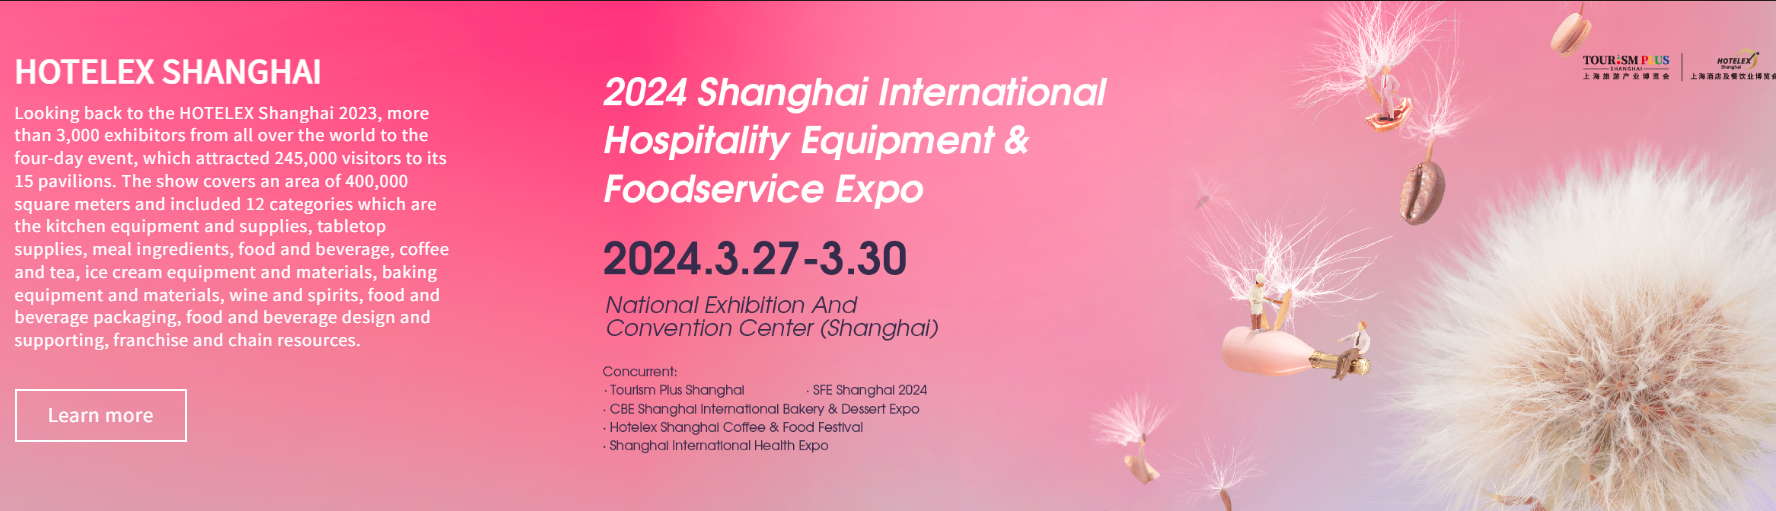 Bakit HOTELEX Shanghai Exhibition 2024?